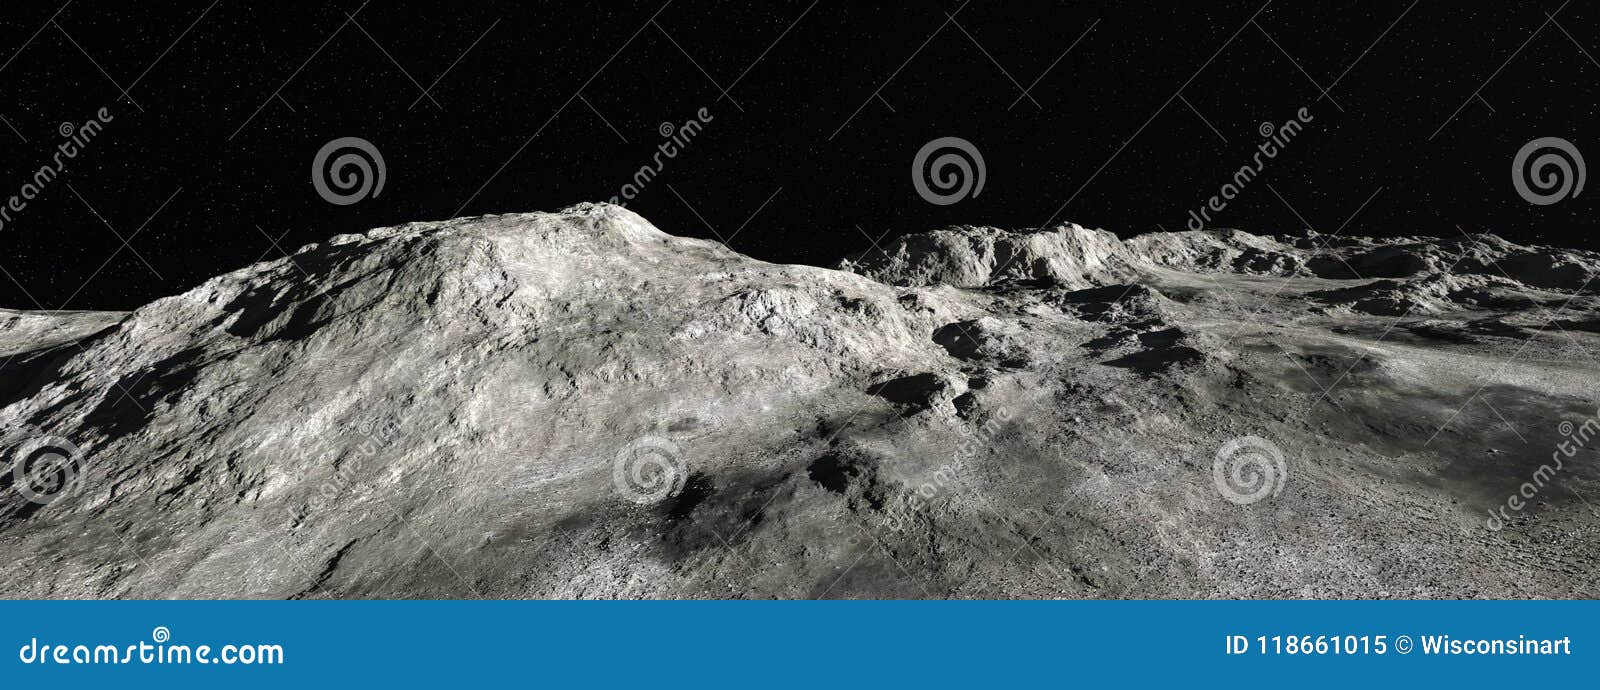 moon lunar landscape panorama background